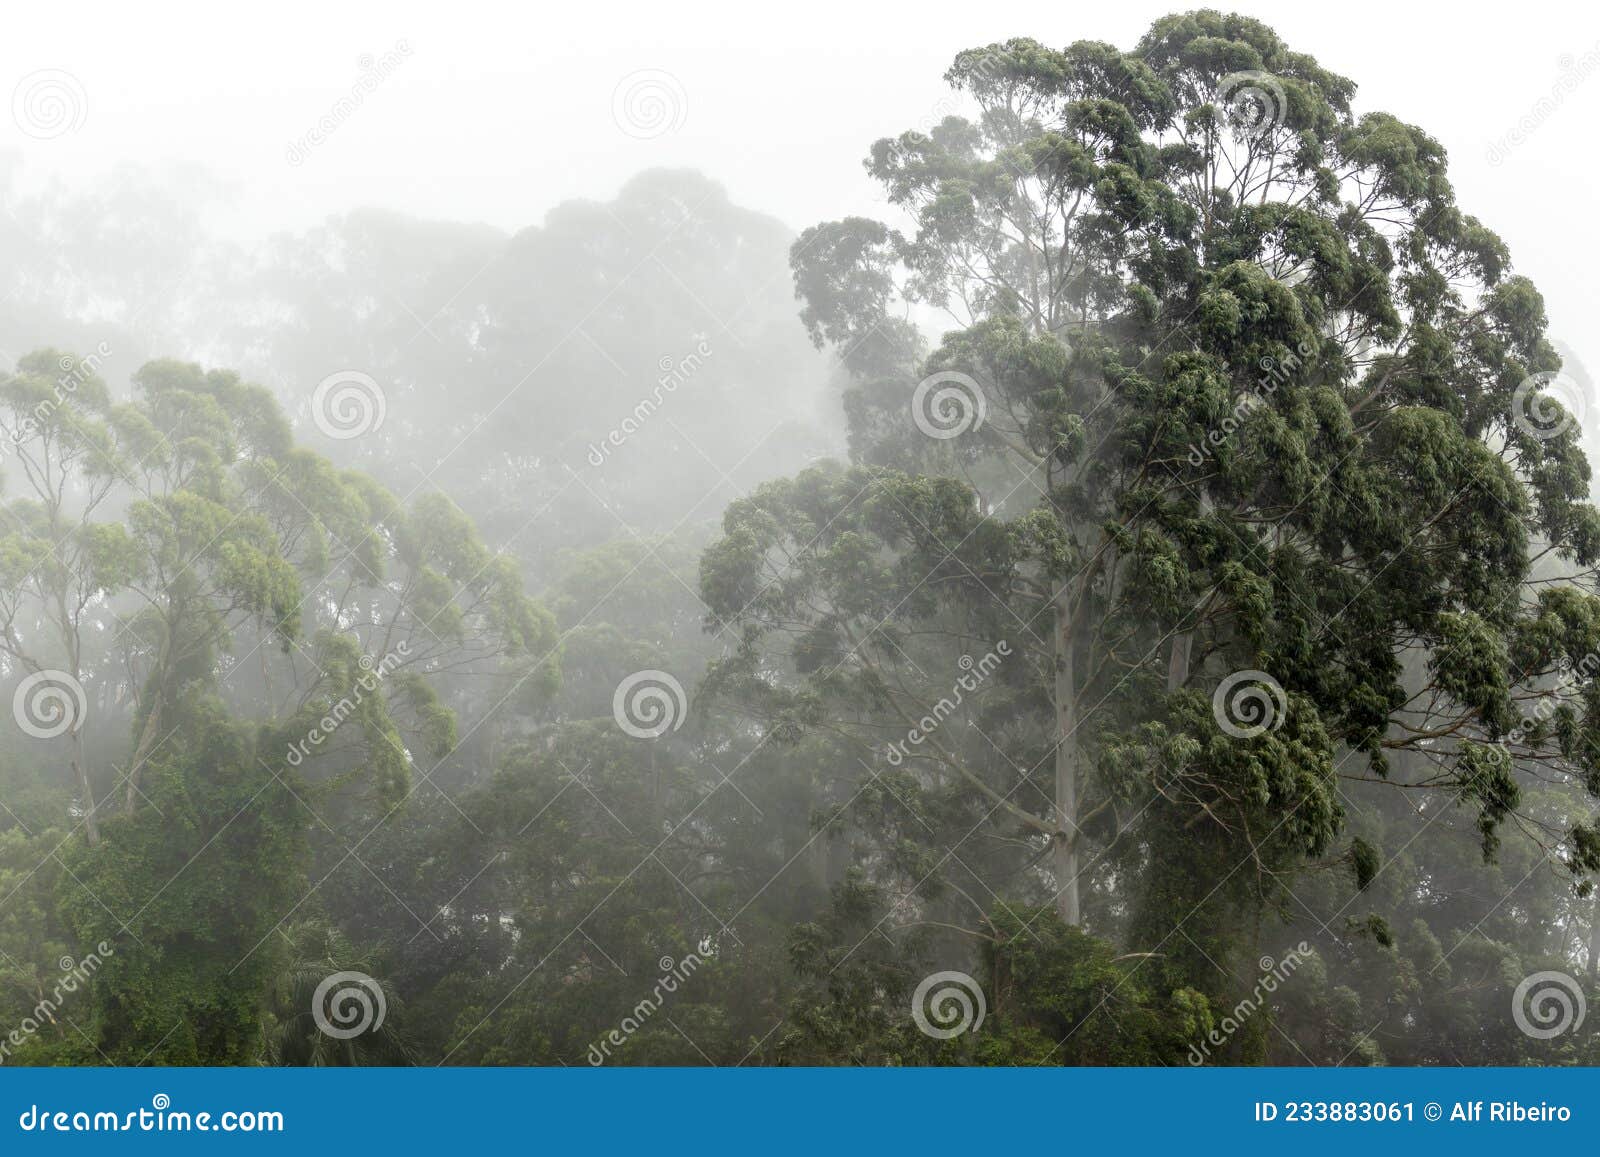 misty jungle in mata atlantica atlantic rainforest biomemisty jungle in mata atlantica atlantic rainforest biome